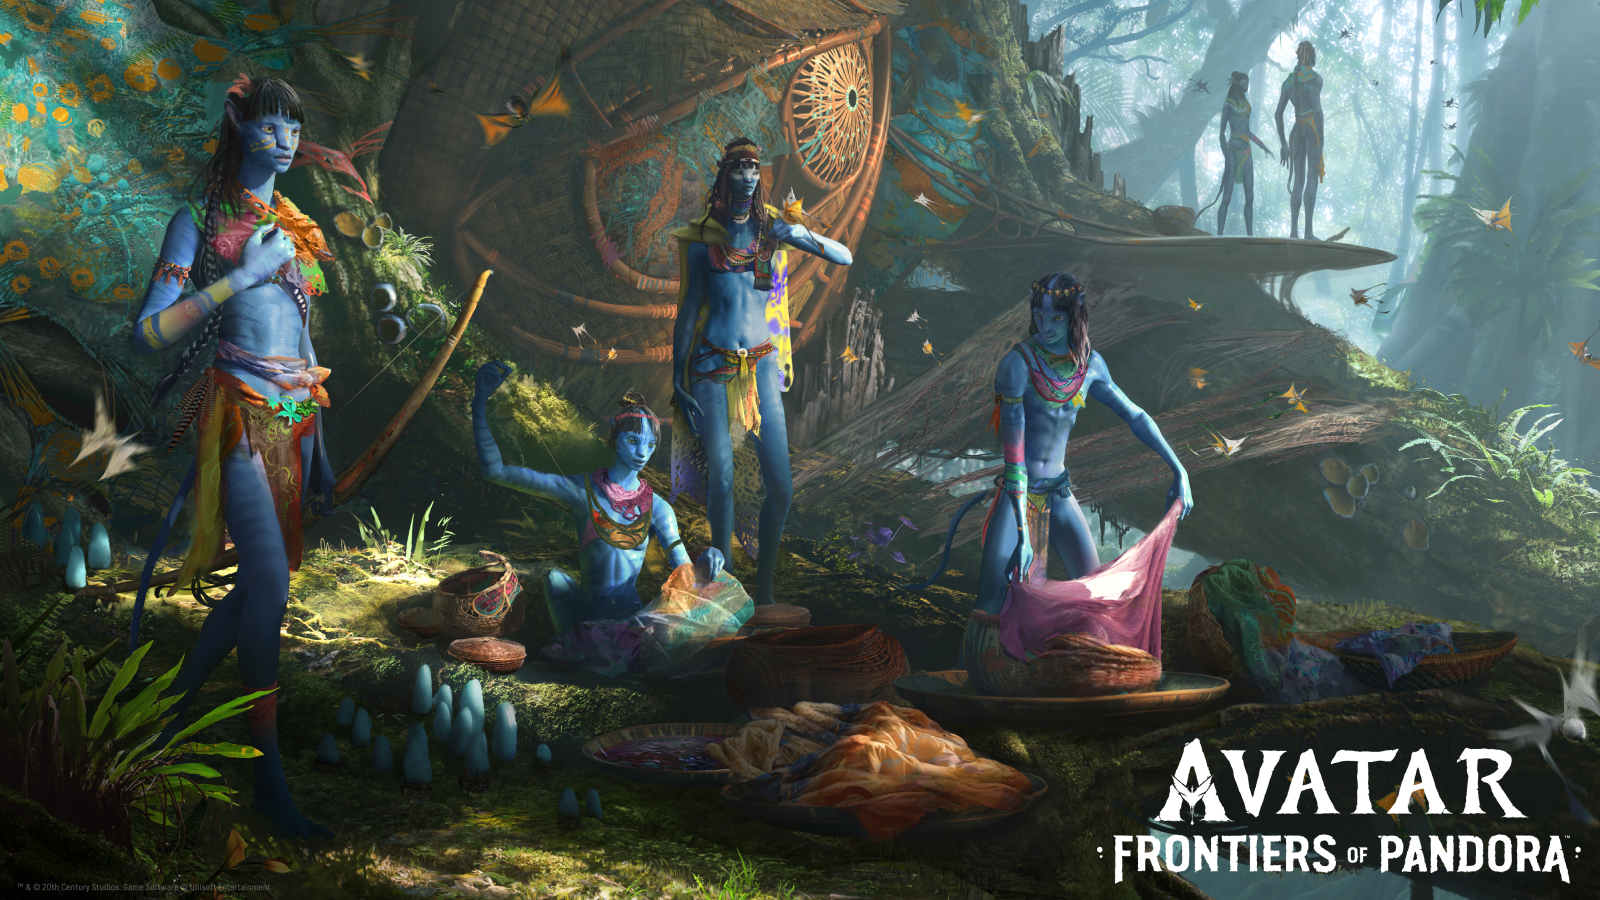 Avatar Legends content coming to Minecraft next month - My Nintendo News